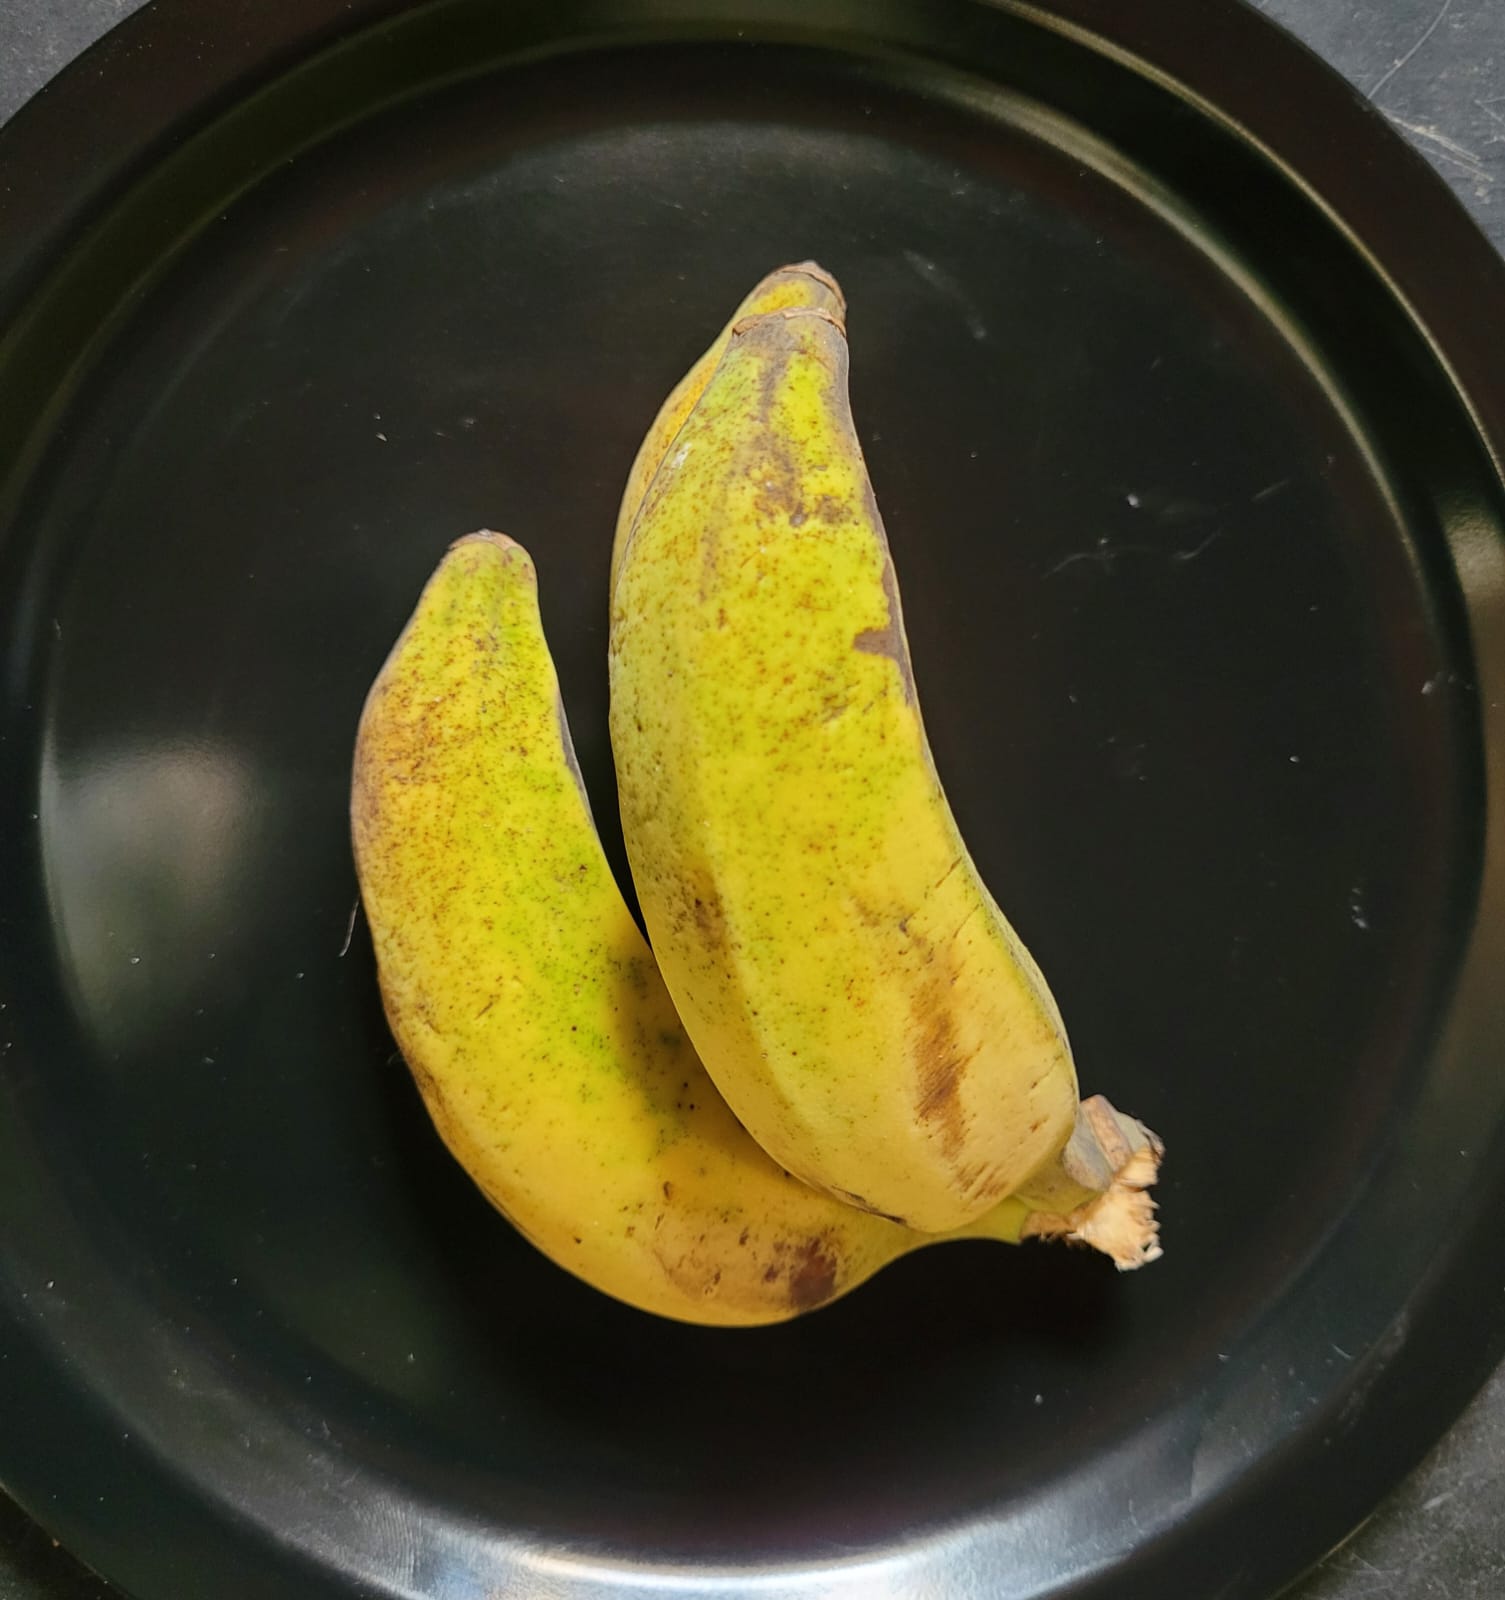 Rajapuri Bananas (Desi) - Naturally Grown / Naturally Ripen